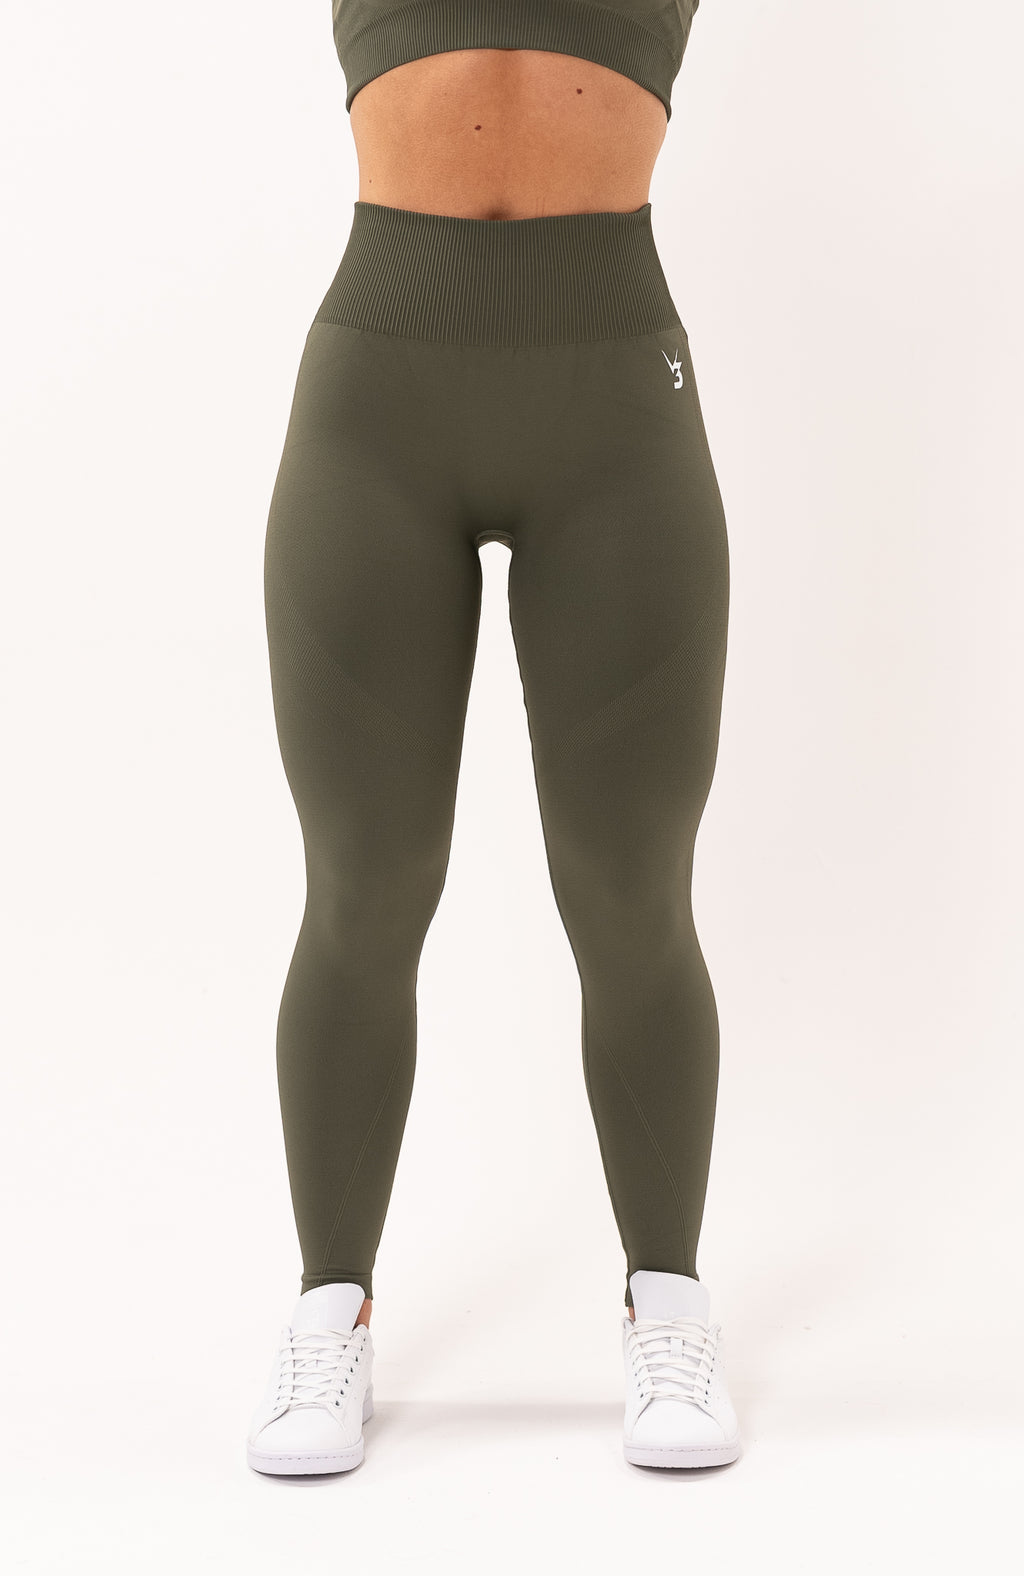 Olive Squat Proof Women's Performance Leggings – be defiant.®